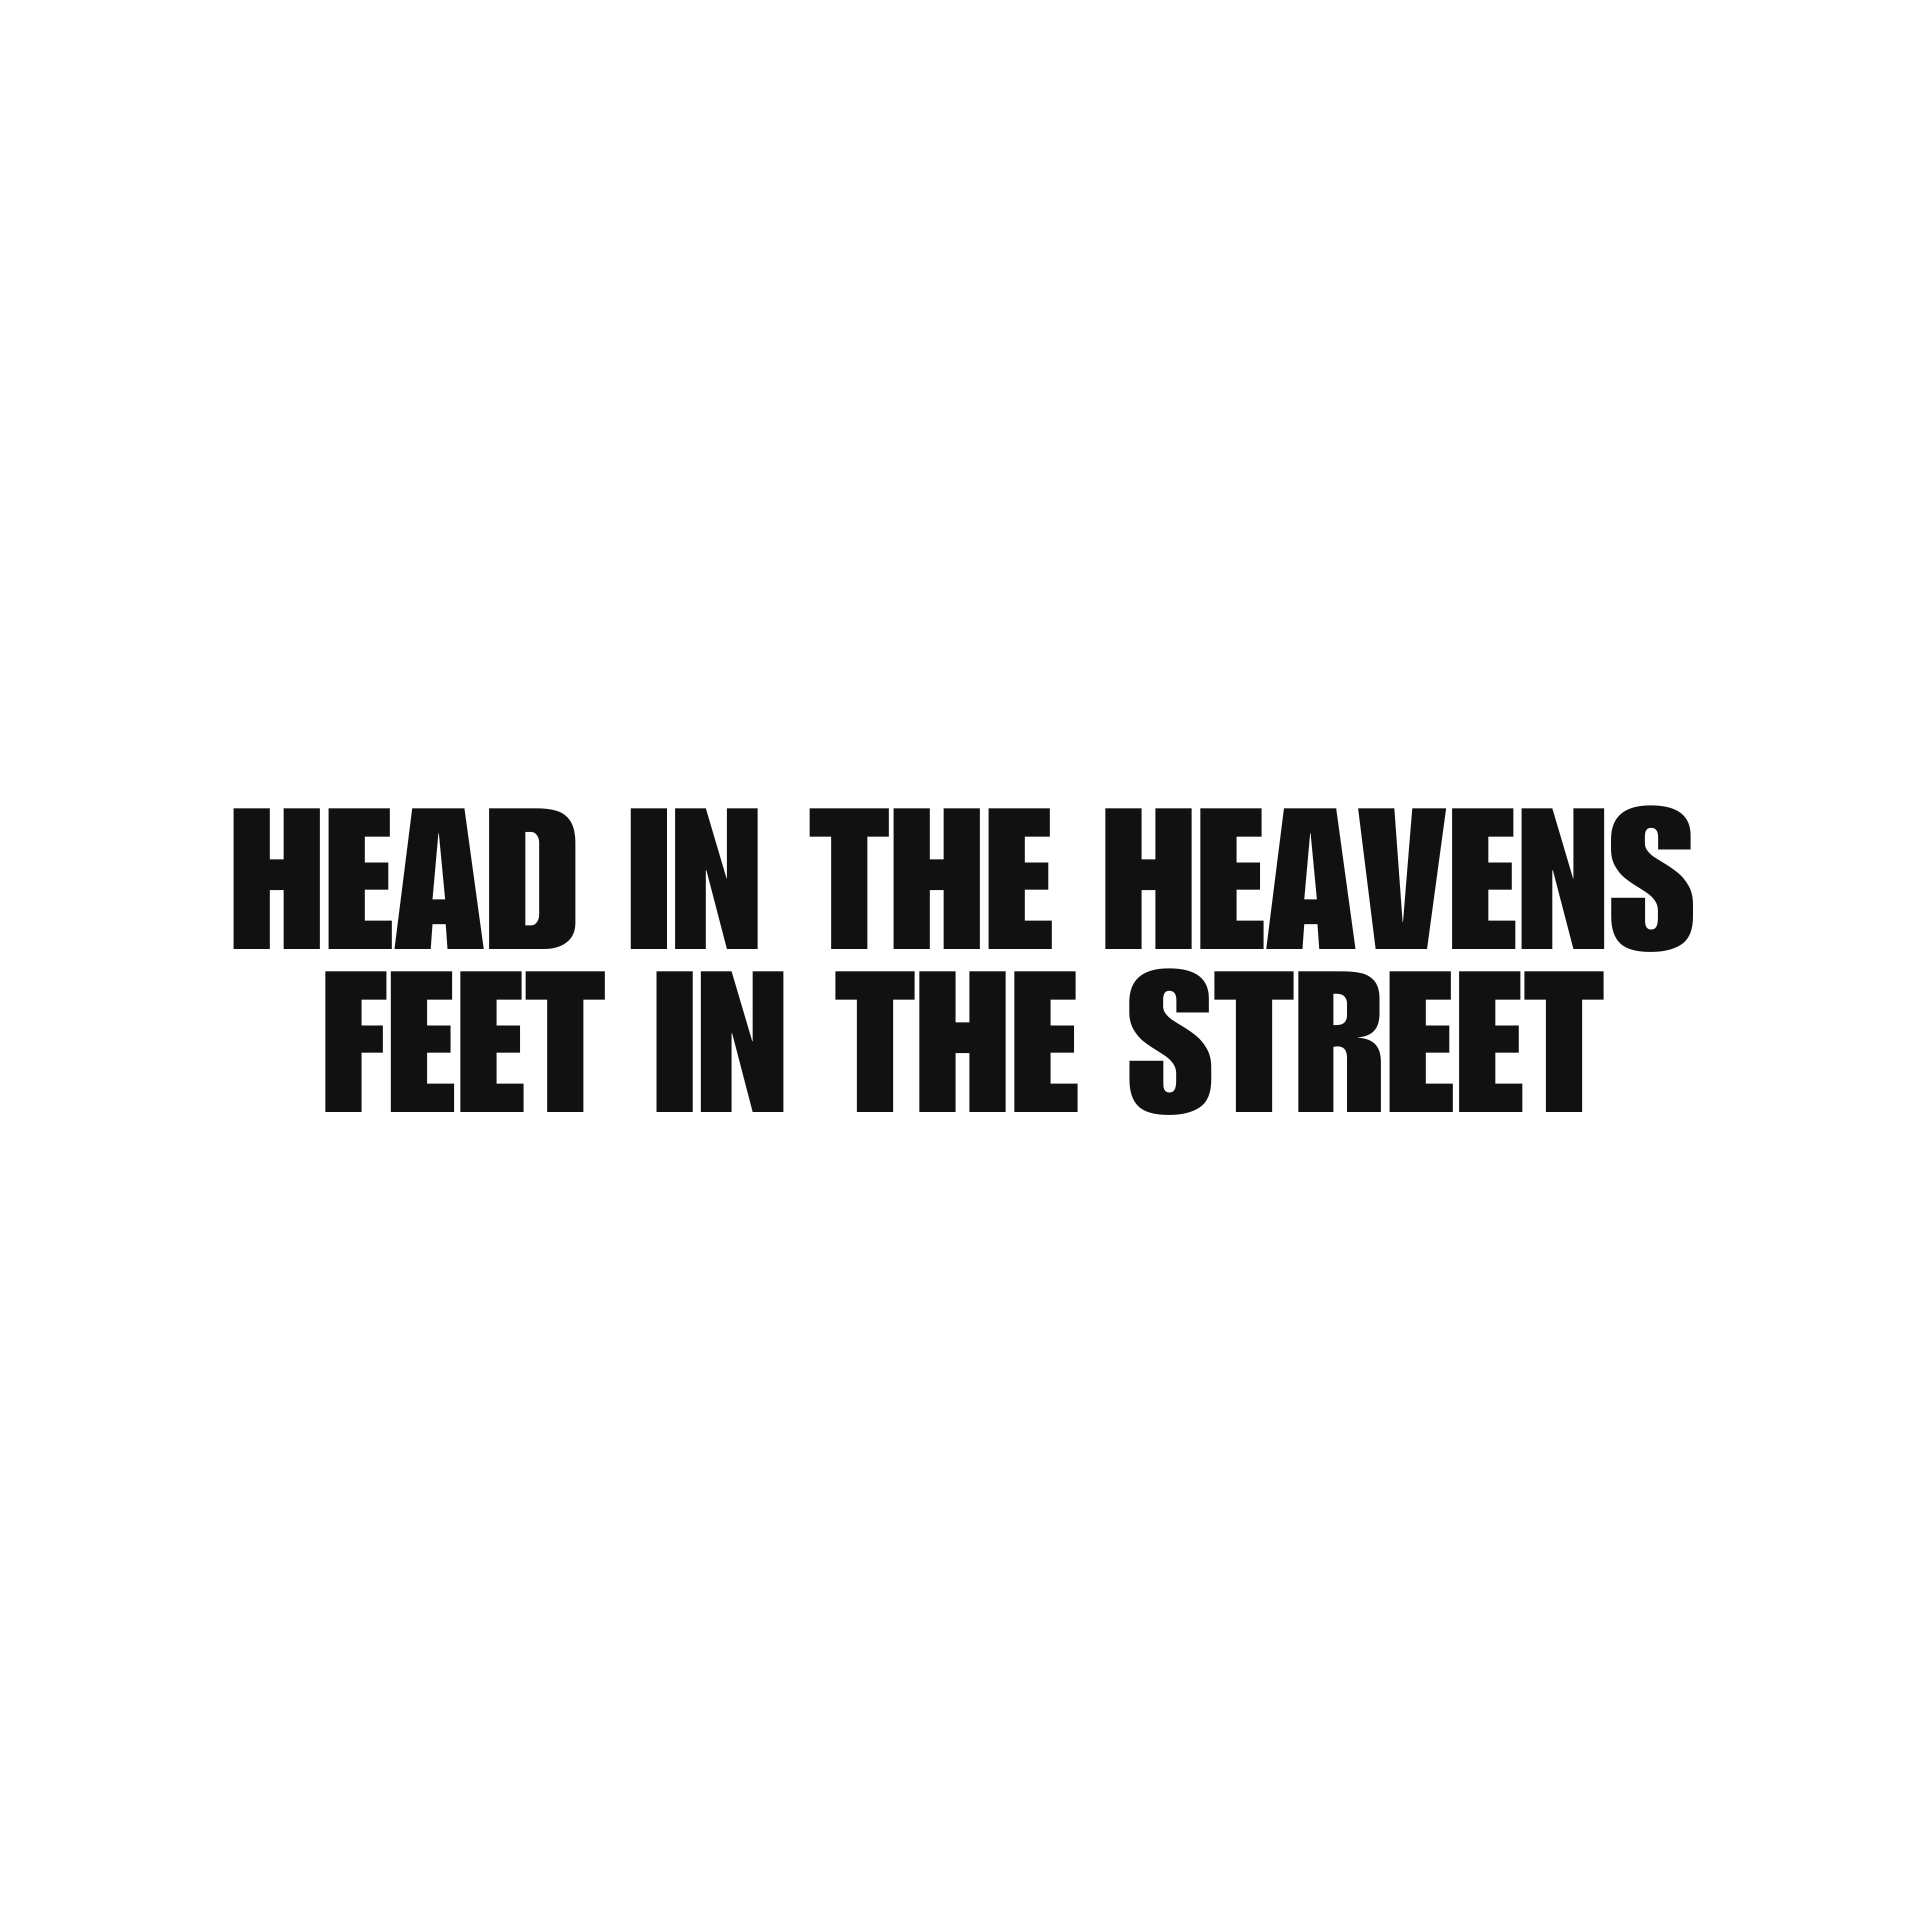 HEAD IN THE HEAVENS